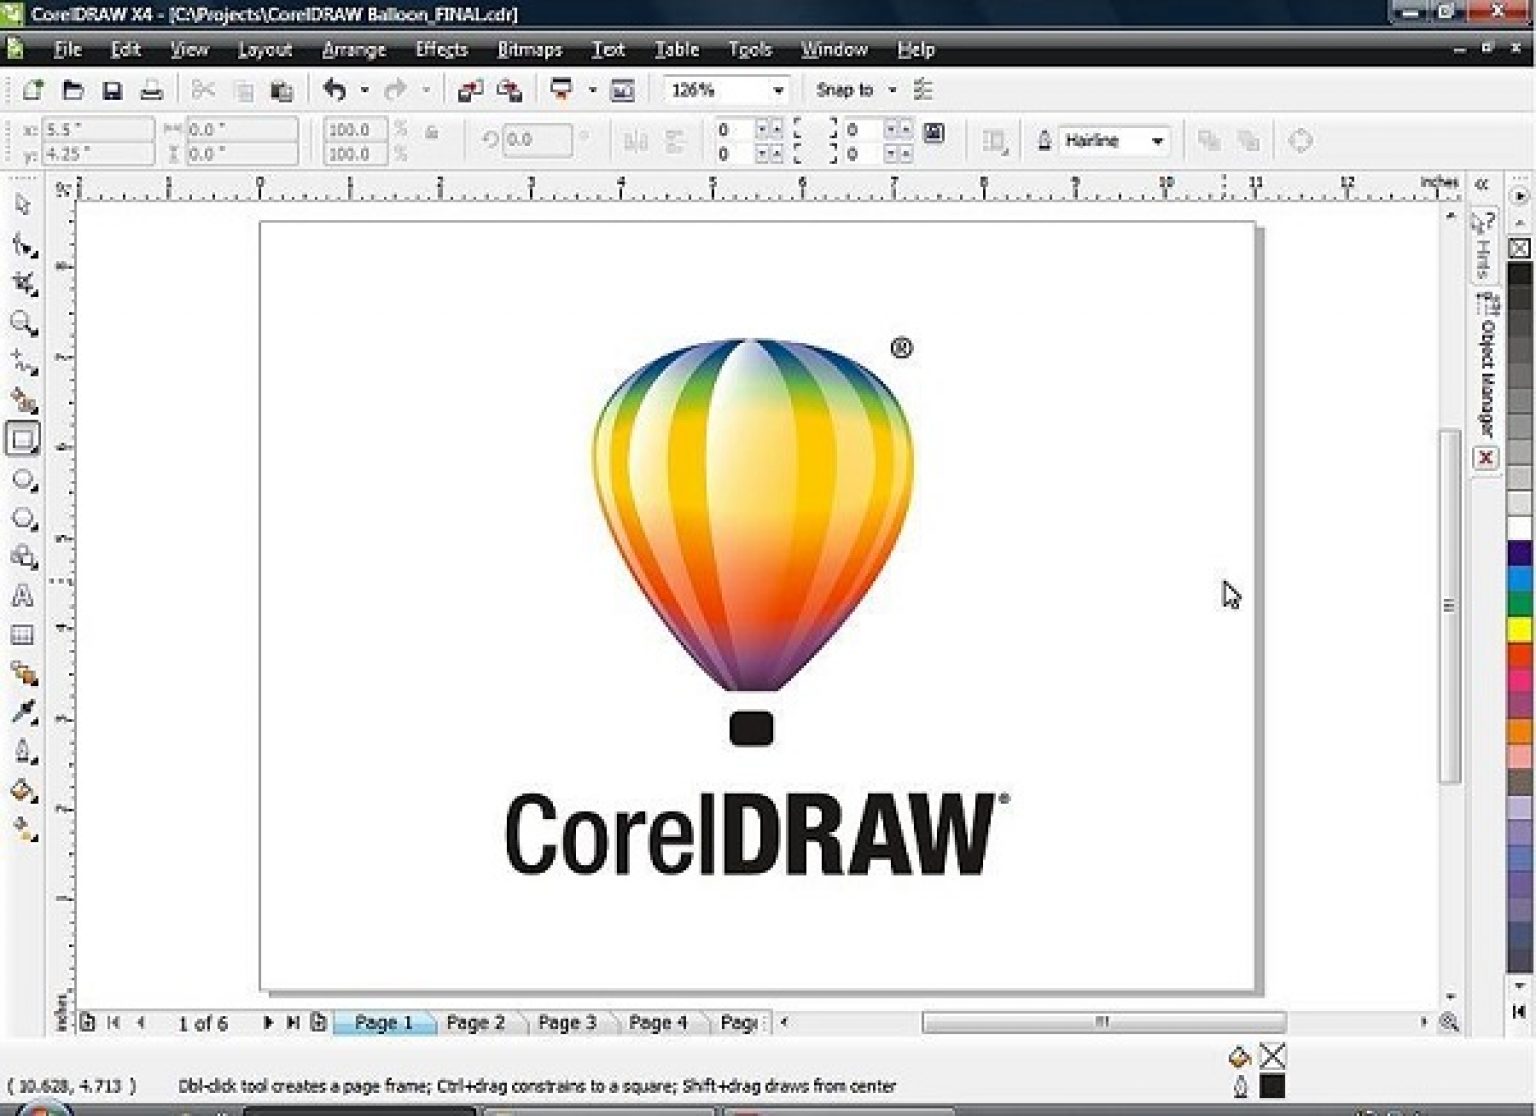 download coreldraw x6 portable english